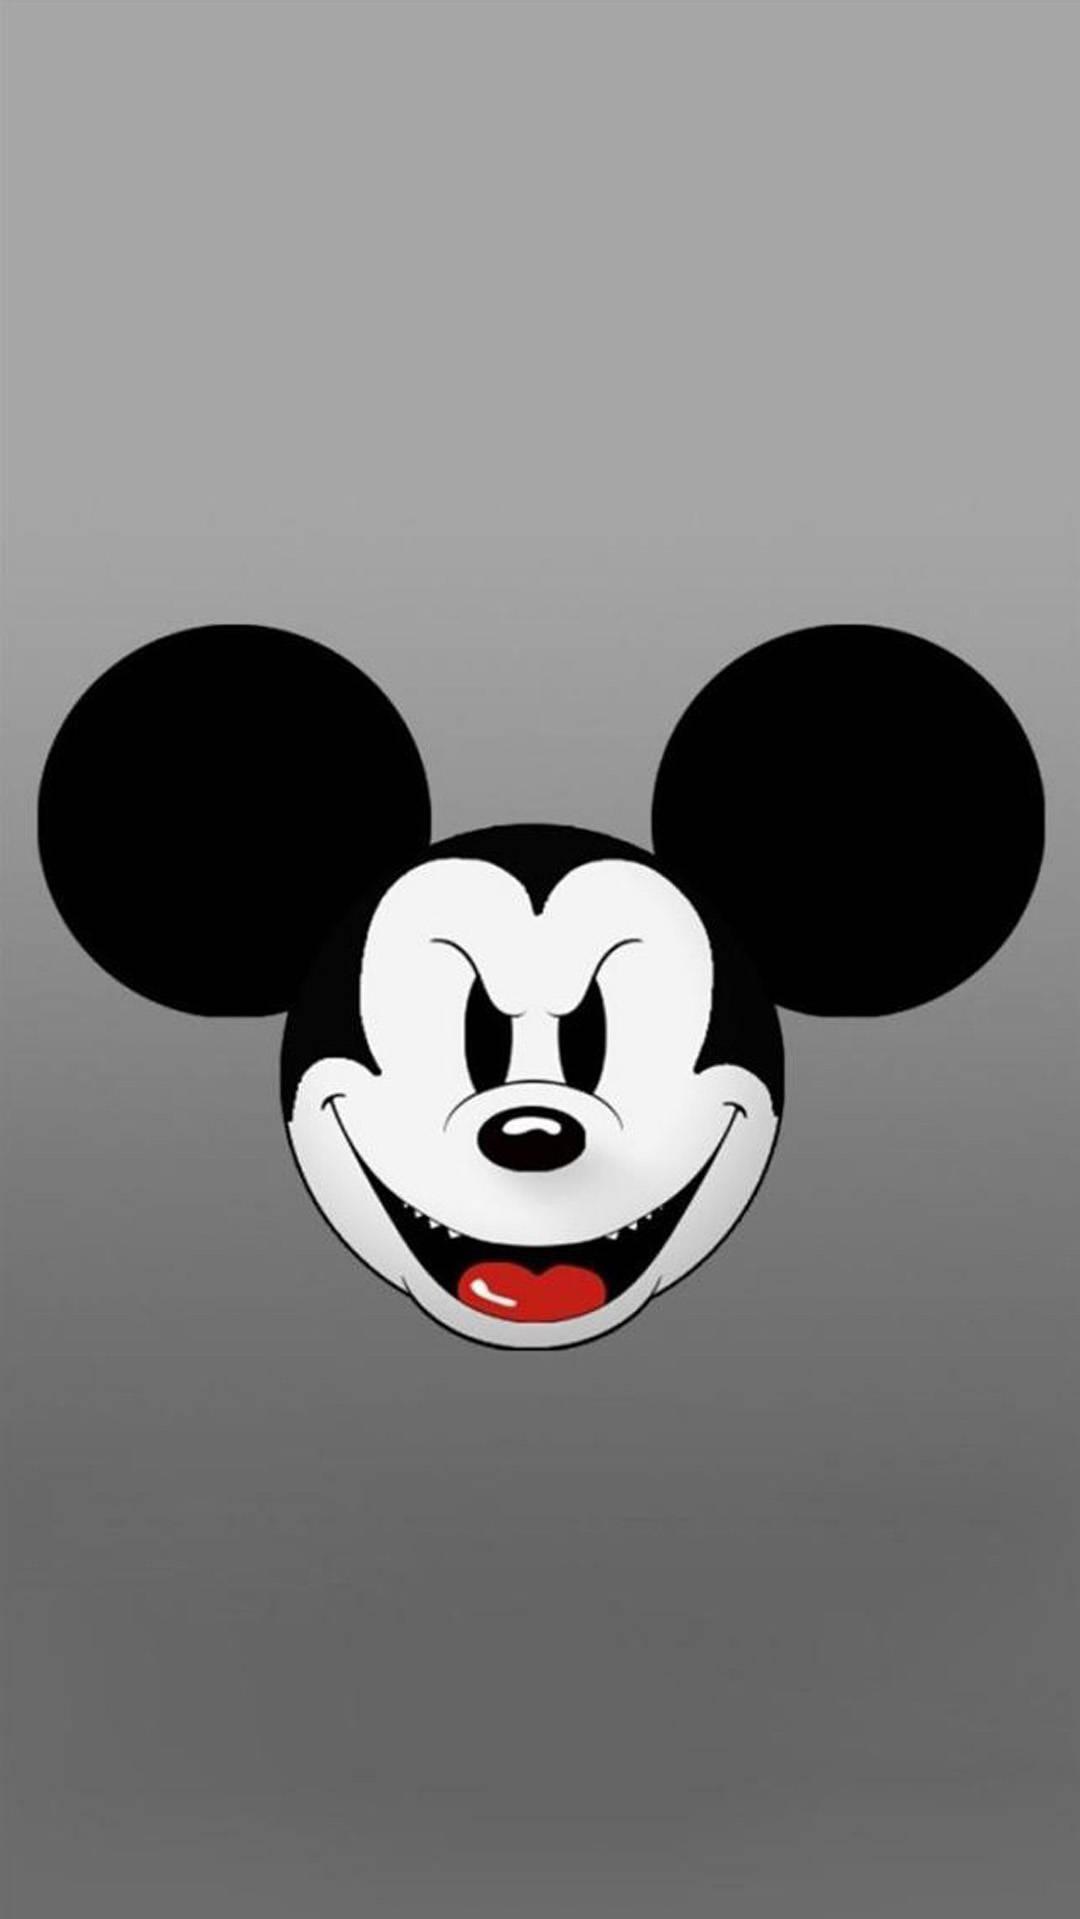 Creepy Mickey Mouse Cartoon iPhone Wallpaper